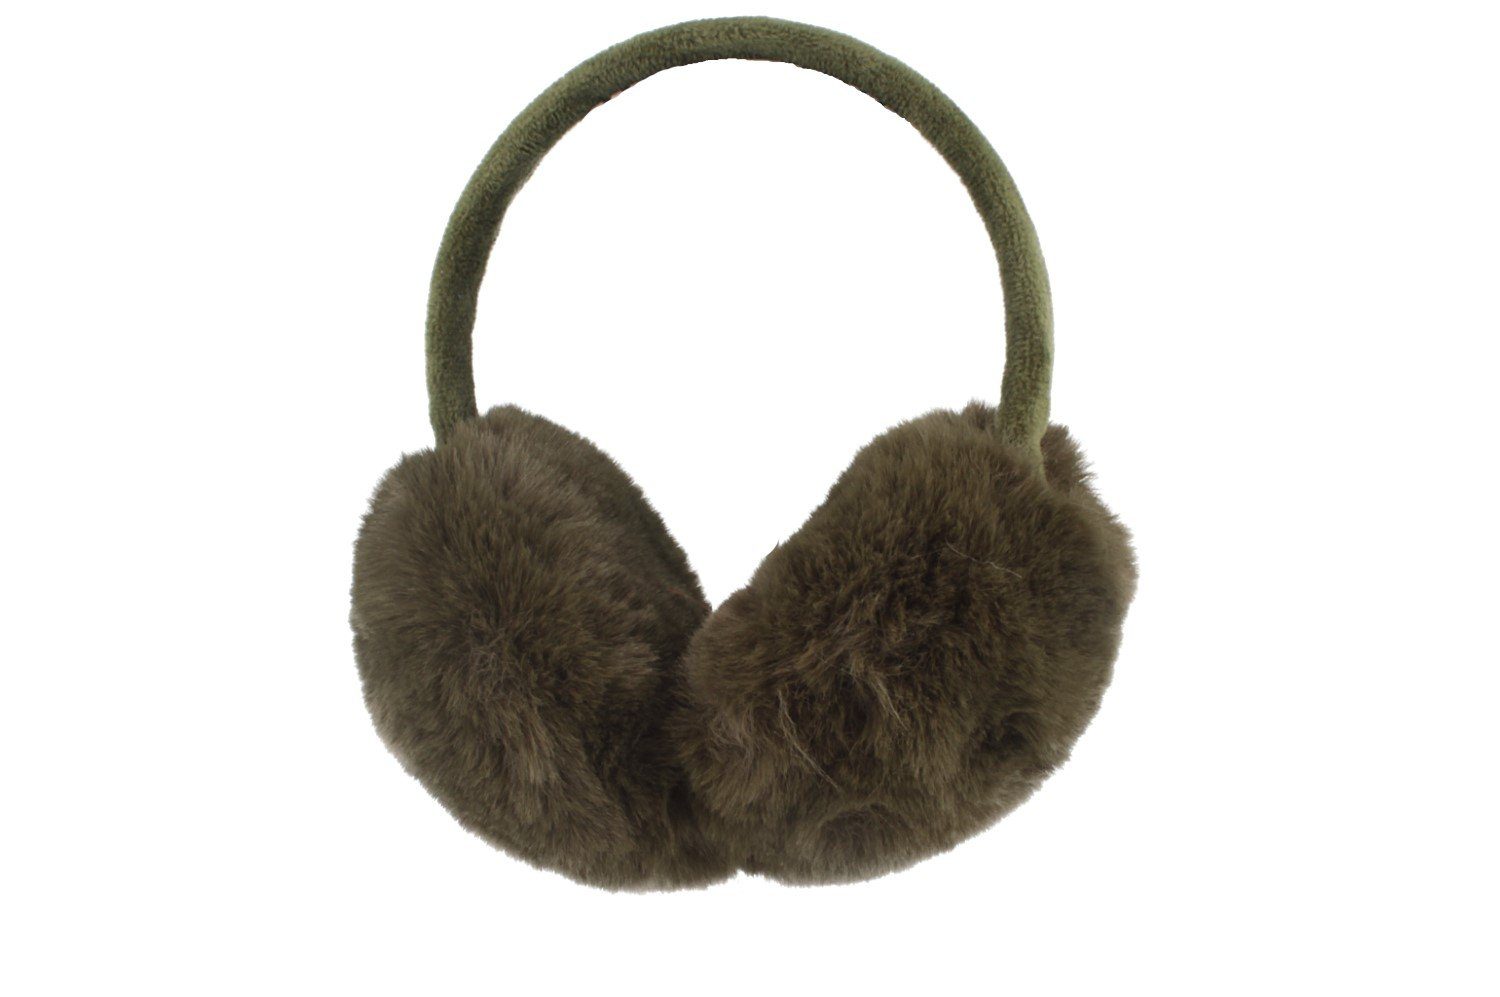 McBurn Stirnband kuschelige Earmuffs Ohrenschützer aus Webpelz-Imitat 21 loden